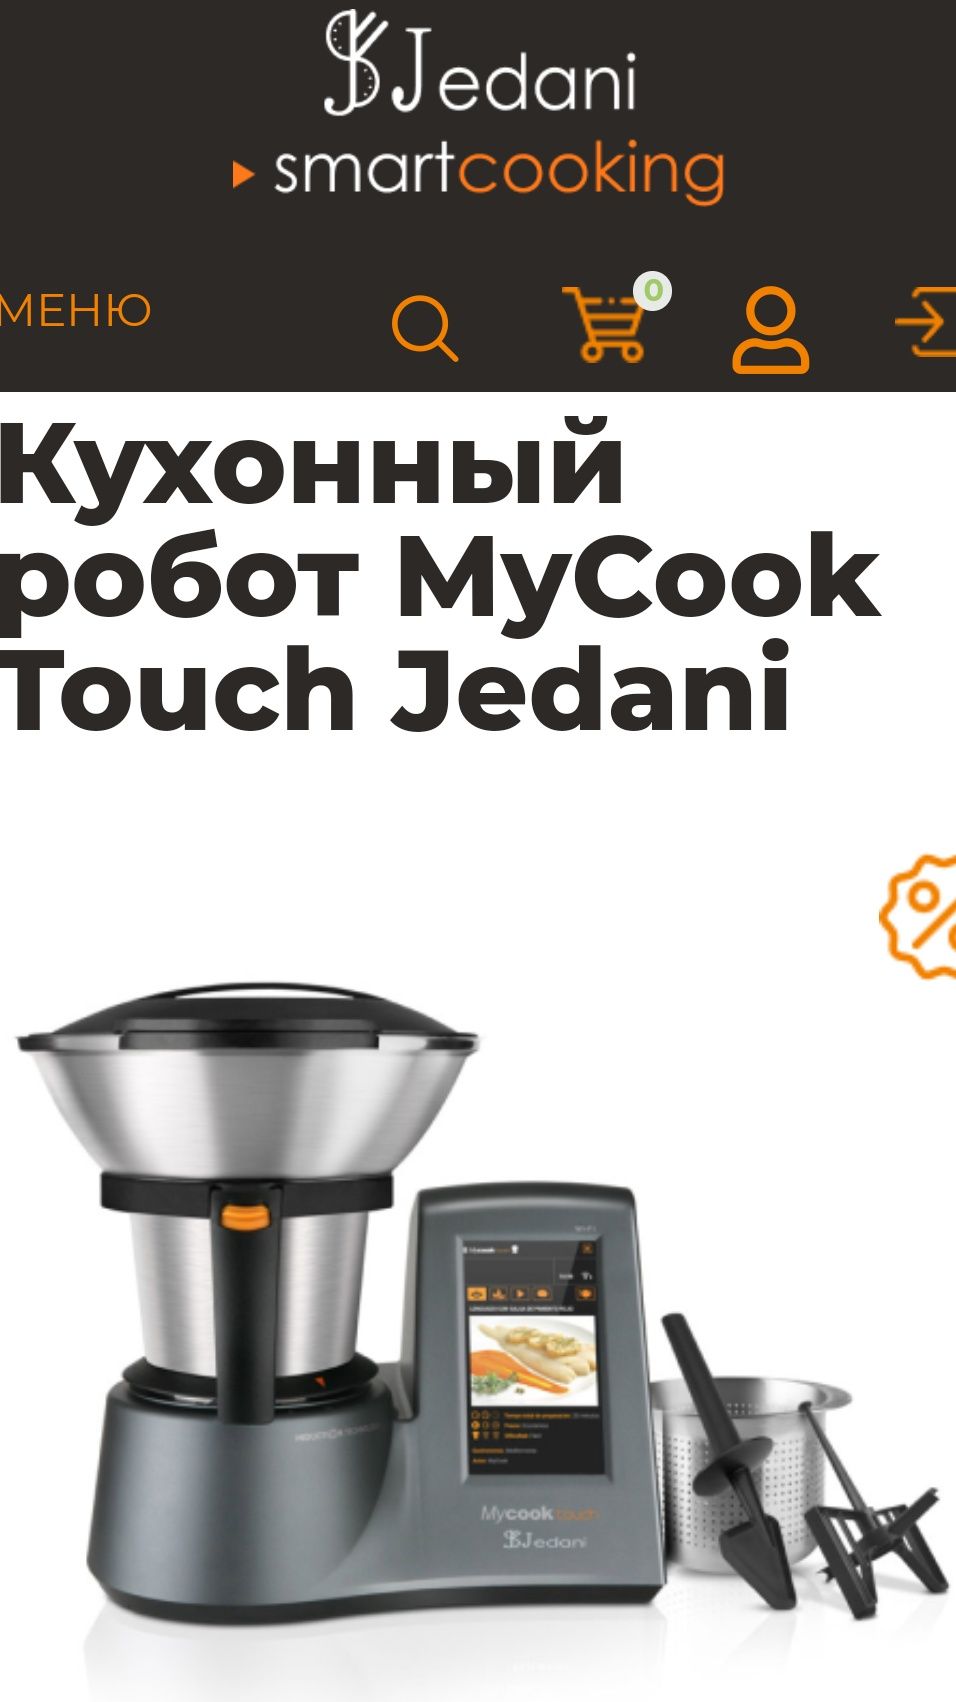 Кухонный робот автомат Mycook Touch Jedani